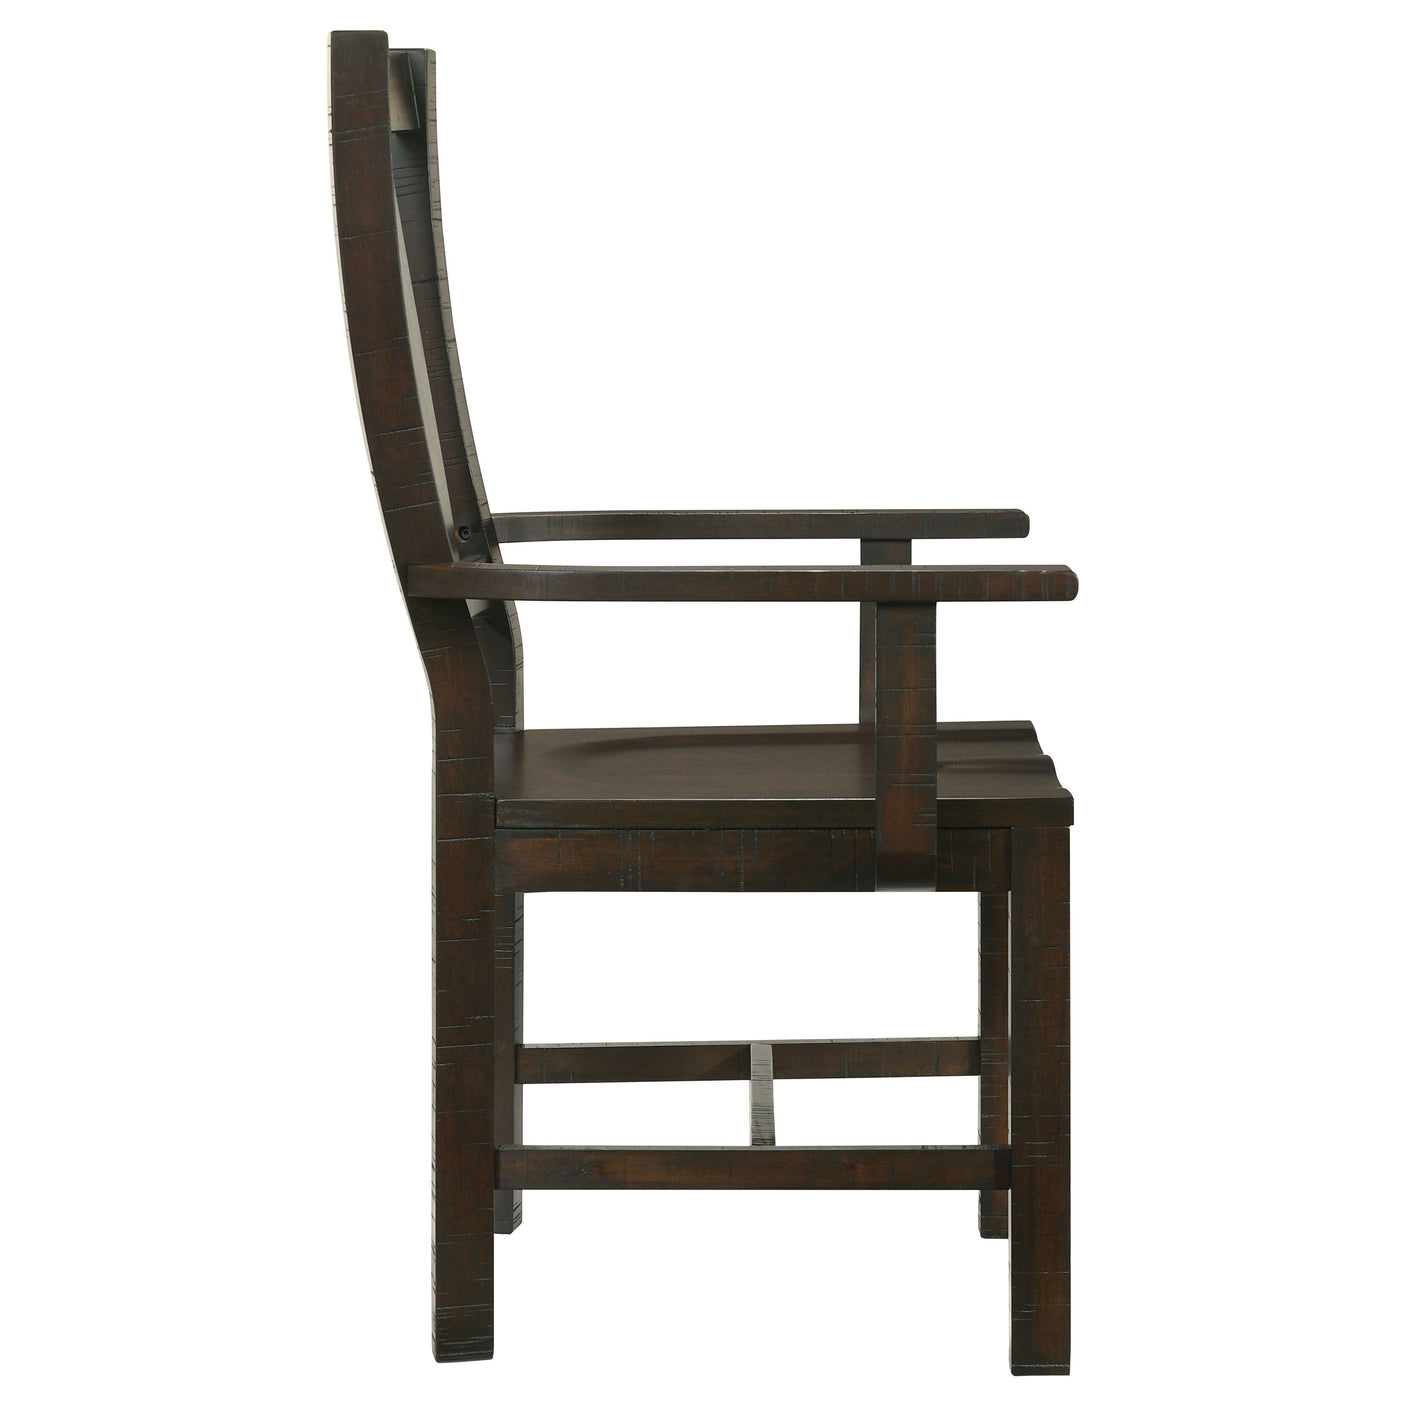 Arm Chair - Calandra Slat Back Arm Chairs Vintage Java (Set of 2)